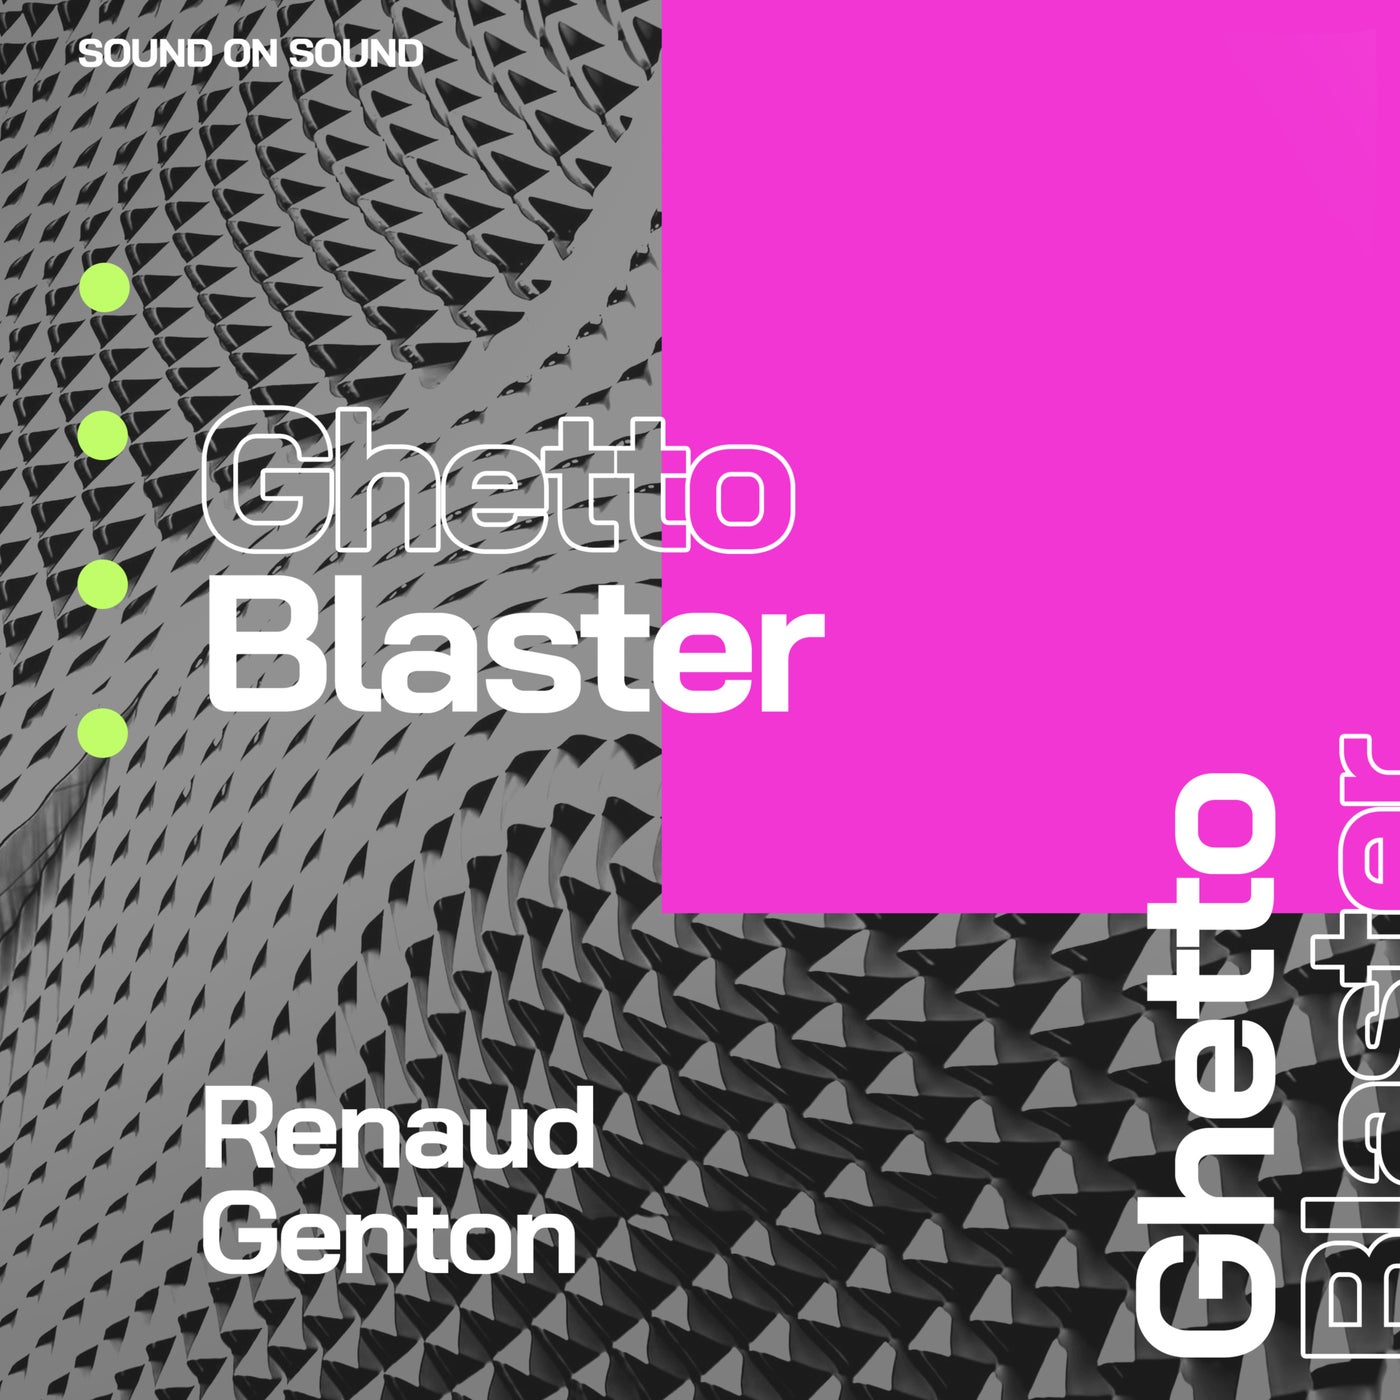 Renaud Genton - Ghettoblaster [SOS382]